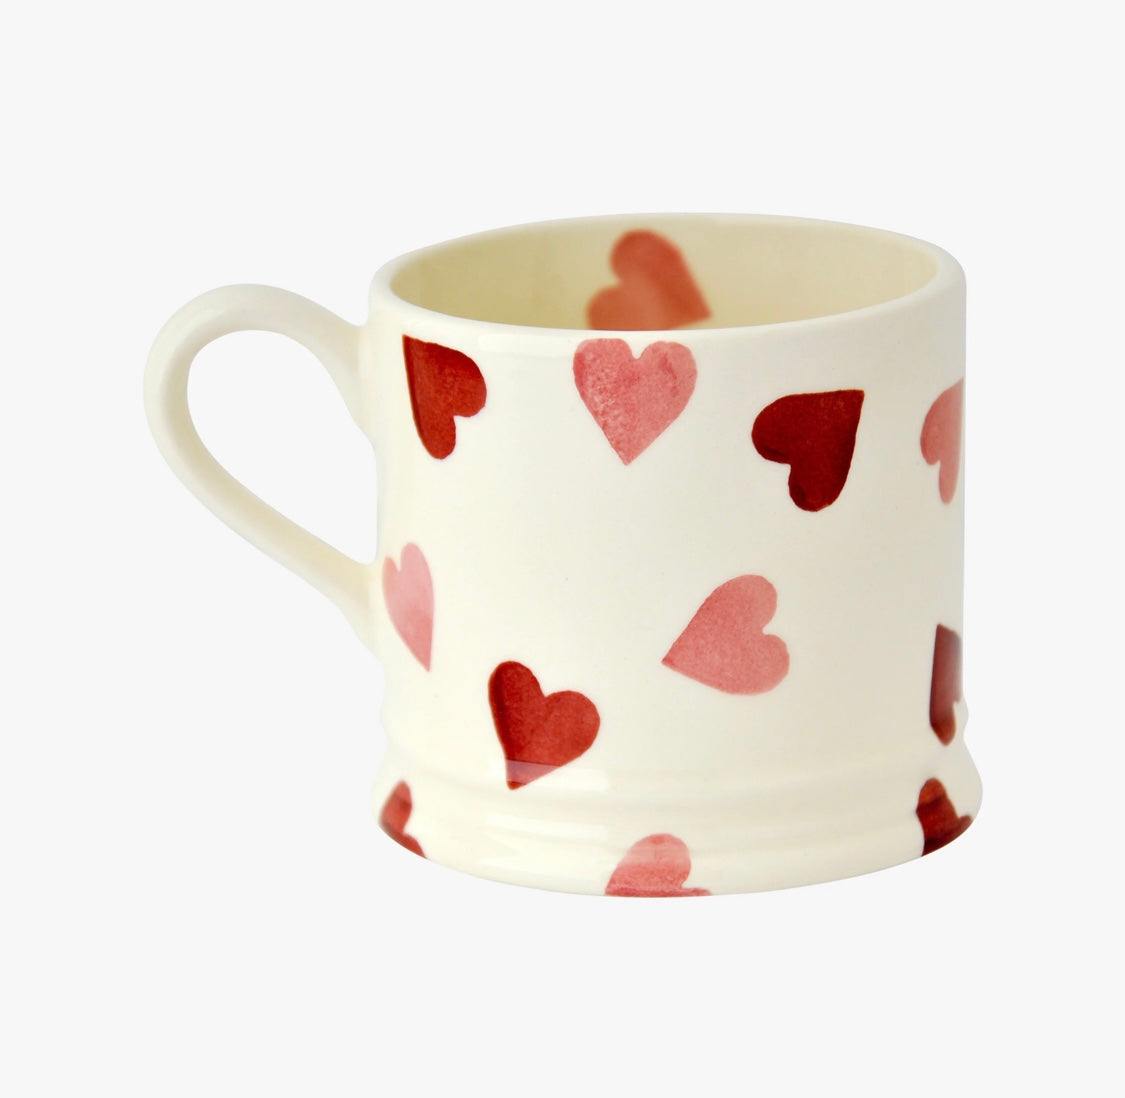 Emma Bridgewater Pink Hearts Small Mug 175ml